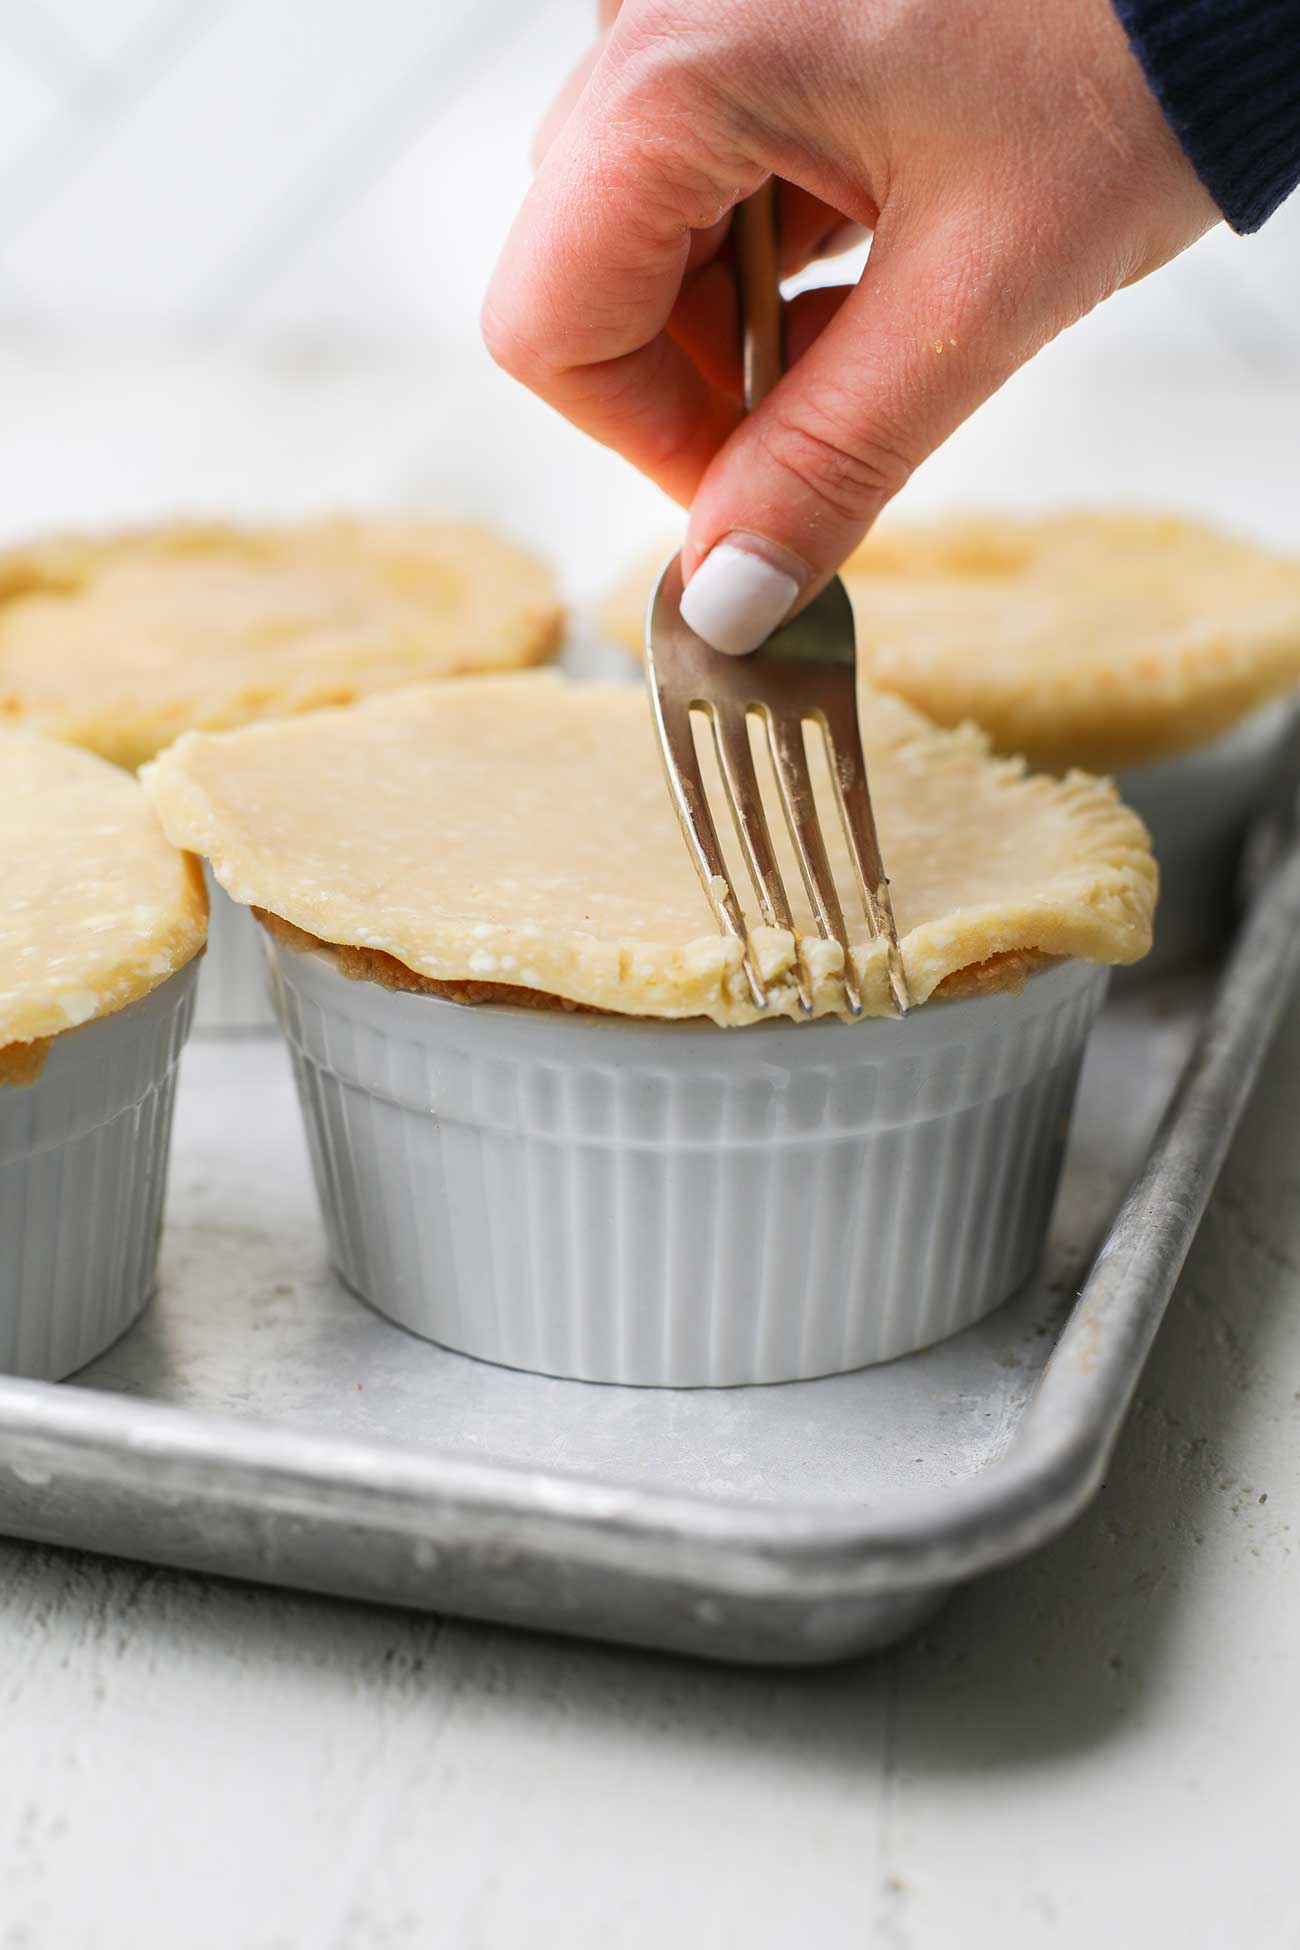 A fork pressing down a top pie crust.